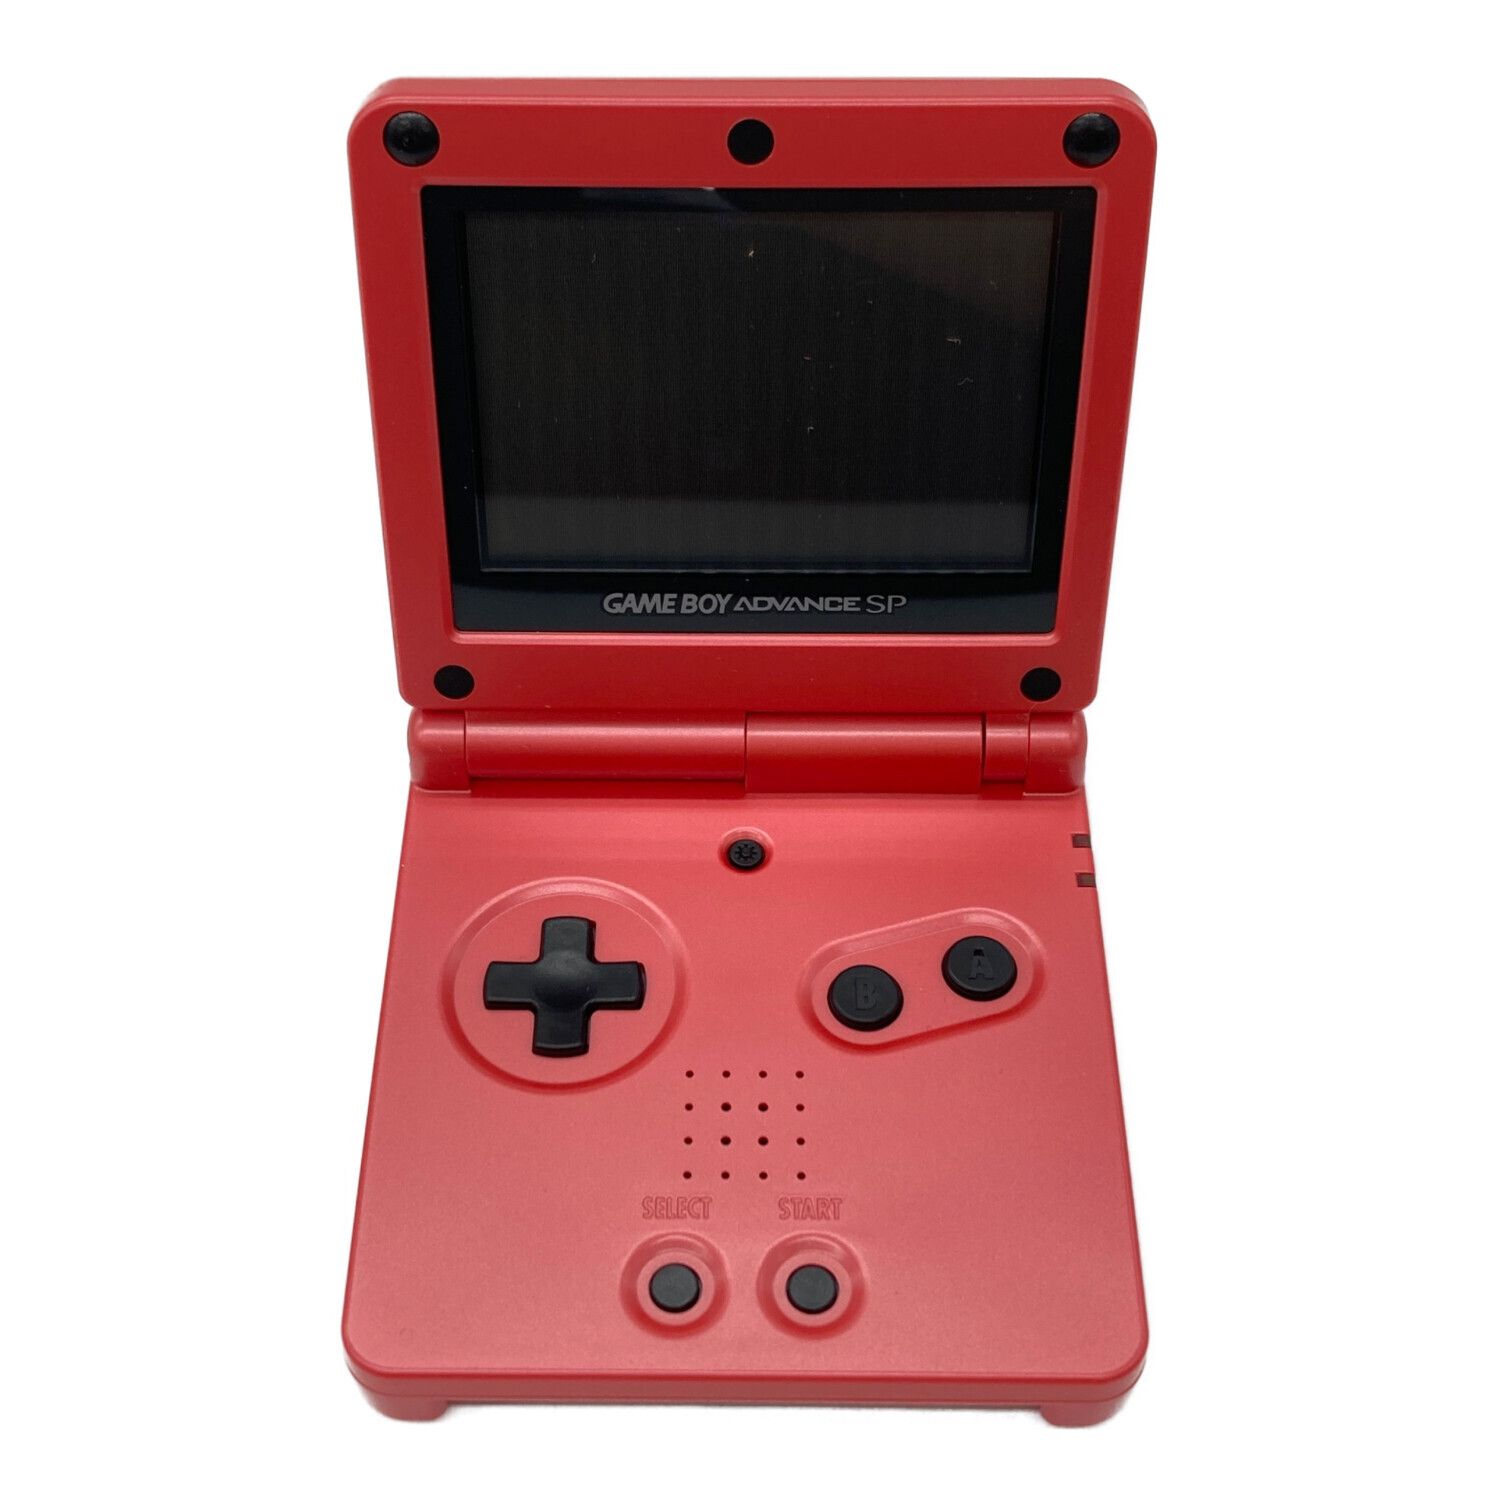 Nintendo (ニンテンドウ) GAMEBOY ADVANCE SP シャア専用カラー ゲーム